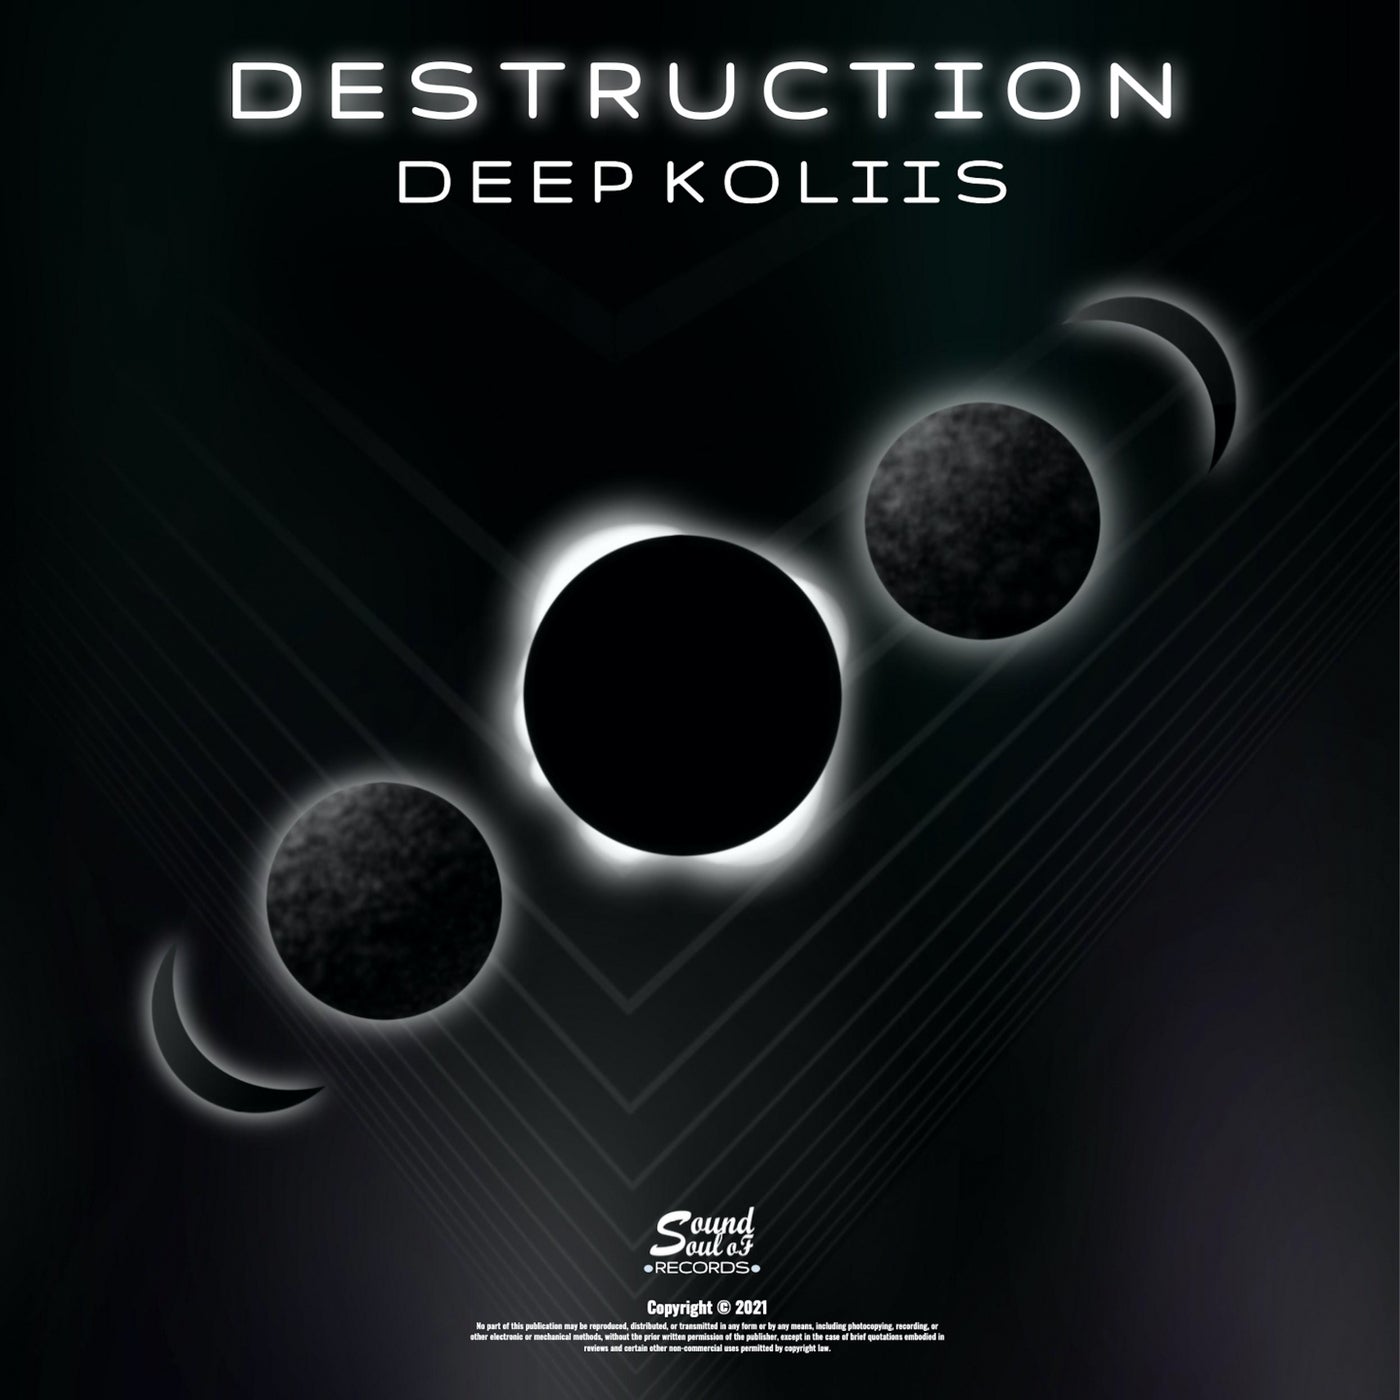 Deep koliis - Destruction (Original Mix)